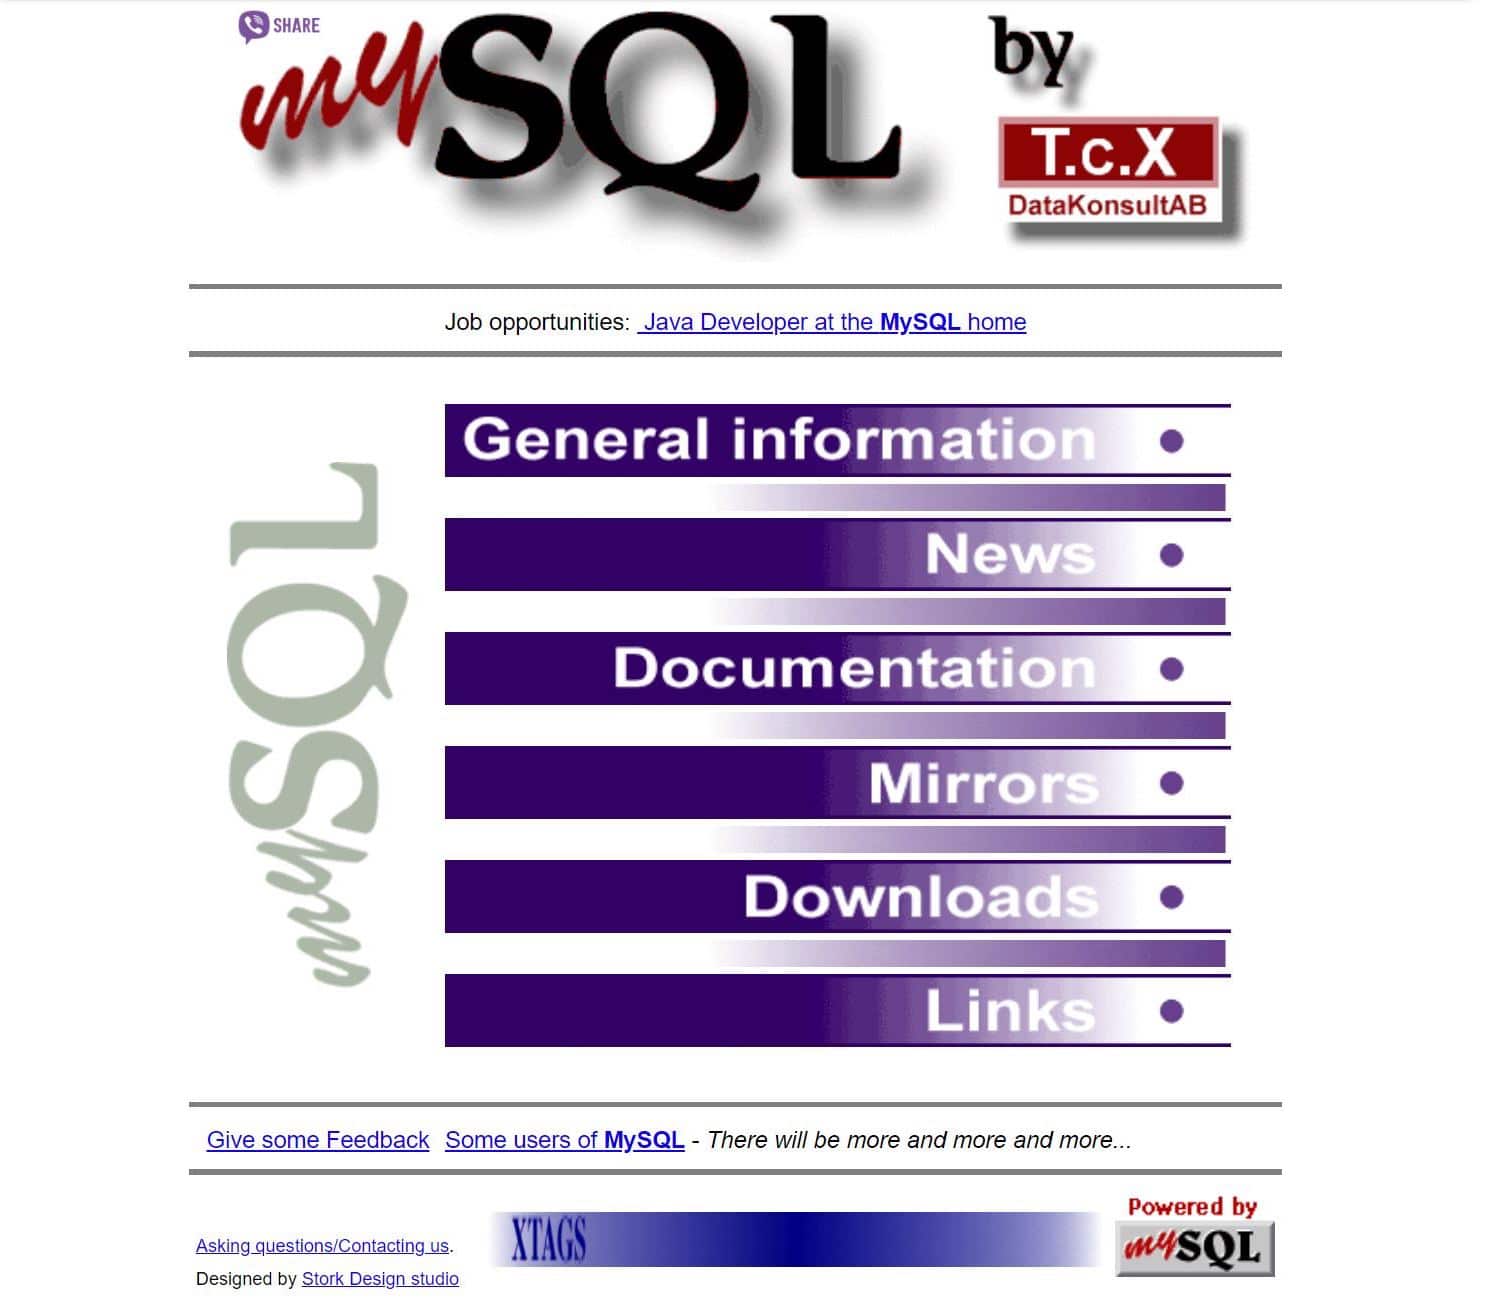 Gammel MySQL-side fra 1998